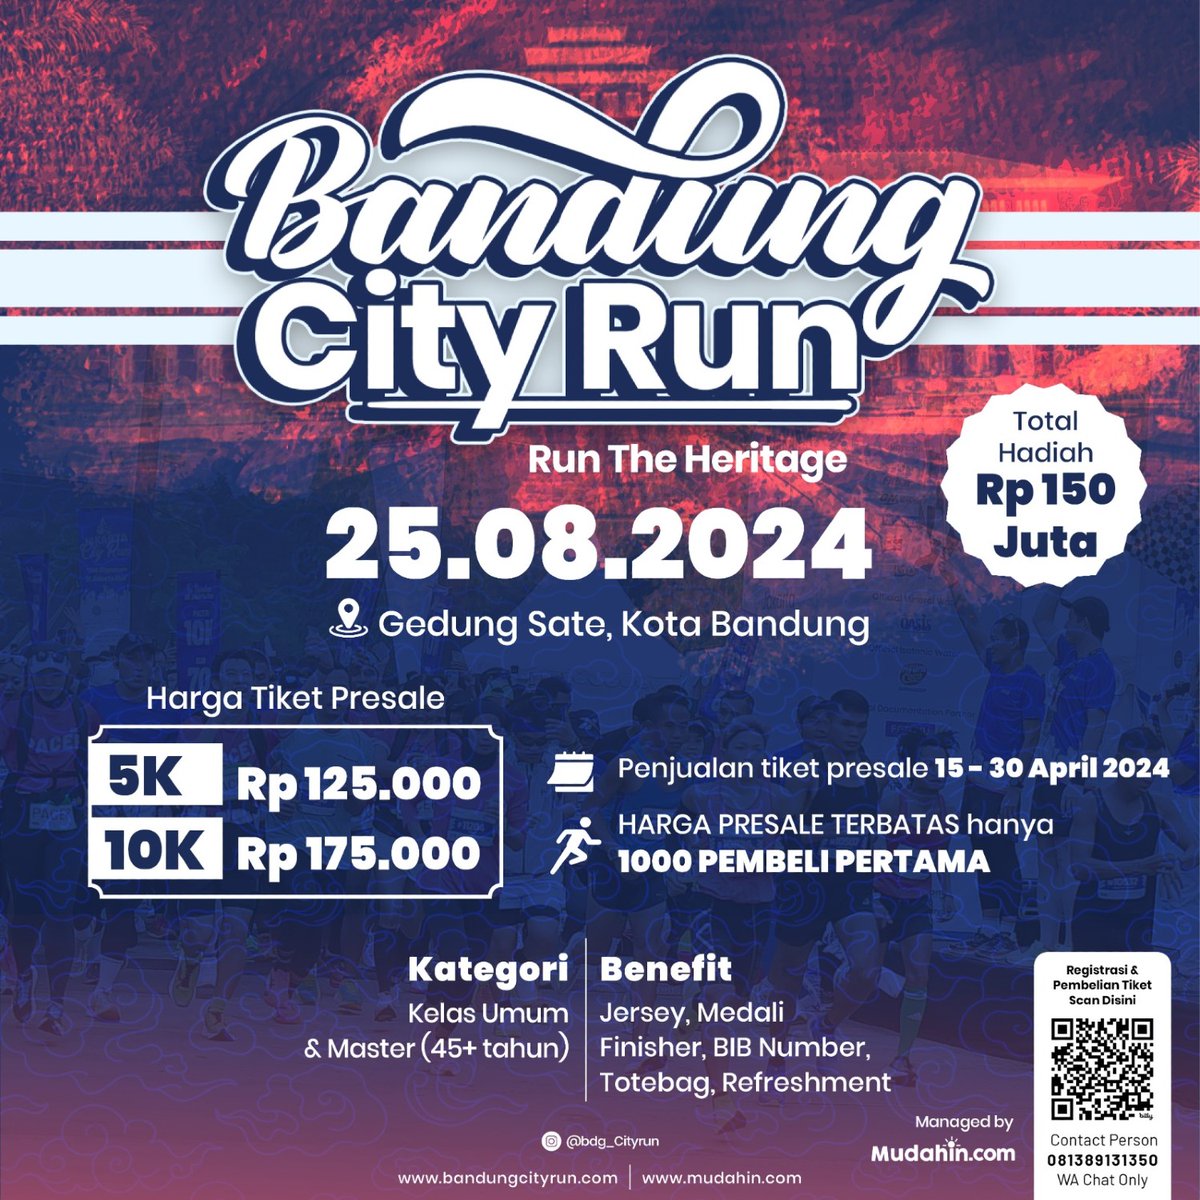 🔽
🌺 Bandung City Run
⏰ 25 Ags 2024
👟 5K/10K • Road Run
🍂 Bandung - Jabar
🖼 instagr.am/bdg_cityrun
💚
🥝 LariKu.info/BCR24 ⏪
🔺
🔺

••••
#BandungCityRun #RunTheHeritage #Mudahincom #Bandung #LariKuinfo #RoadRun #LombaLari #GedungSate #BDGcityrun #JawaBarat